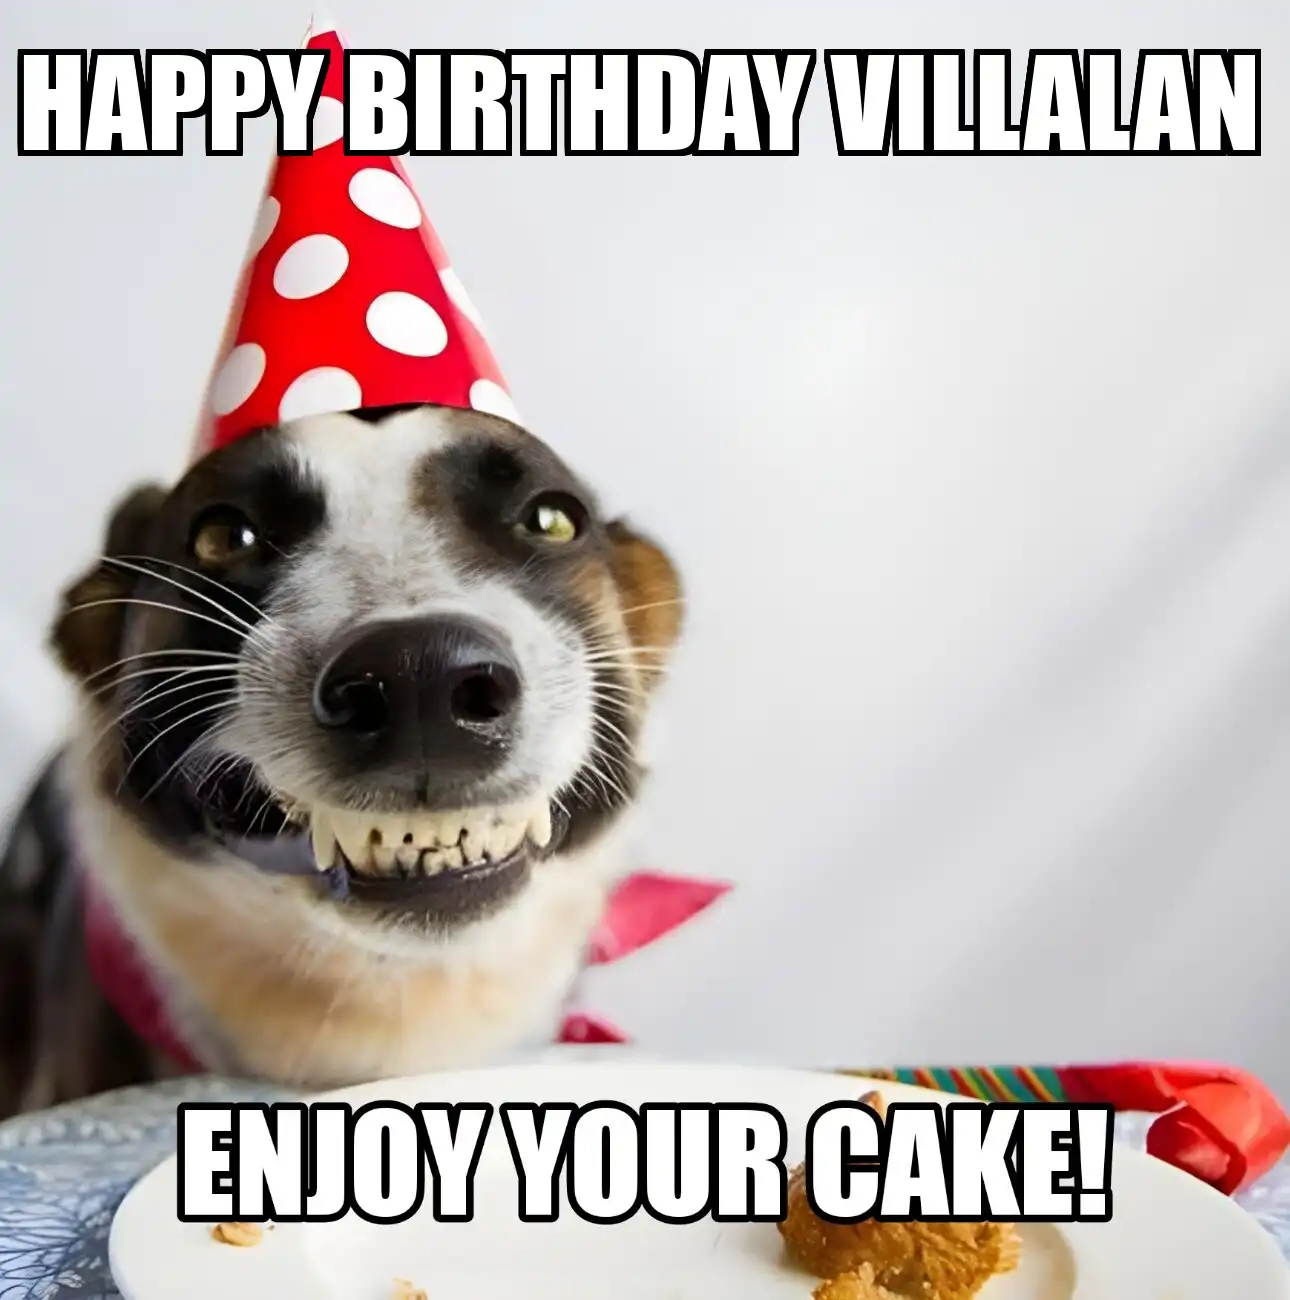 Happy Birthday Villalan Enjoy Your Cake Dog Meme